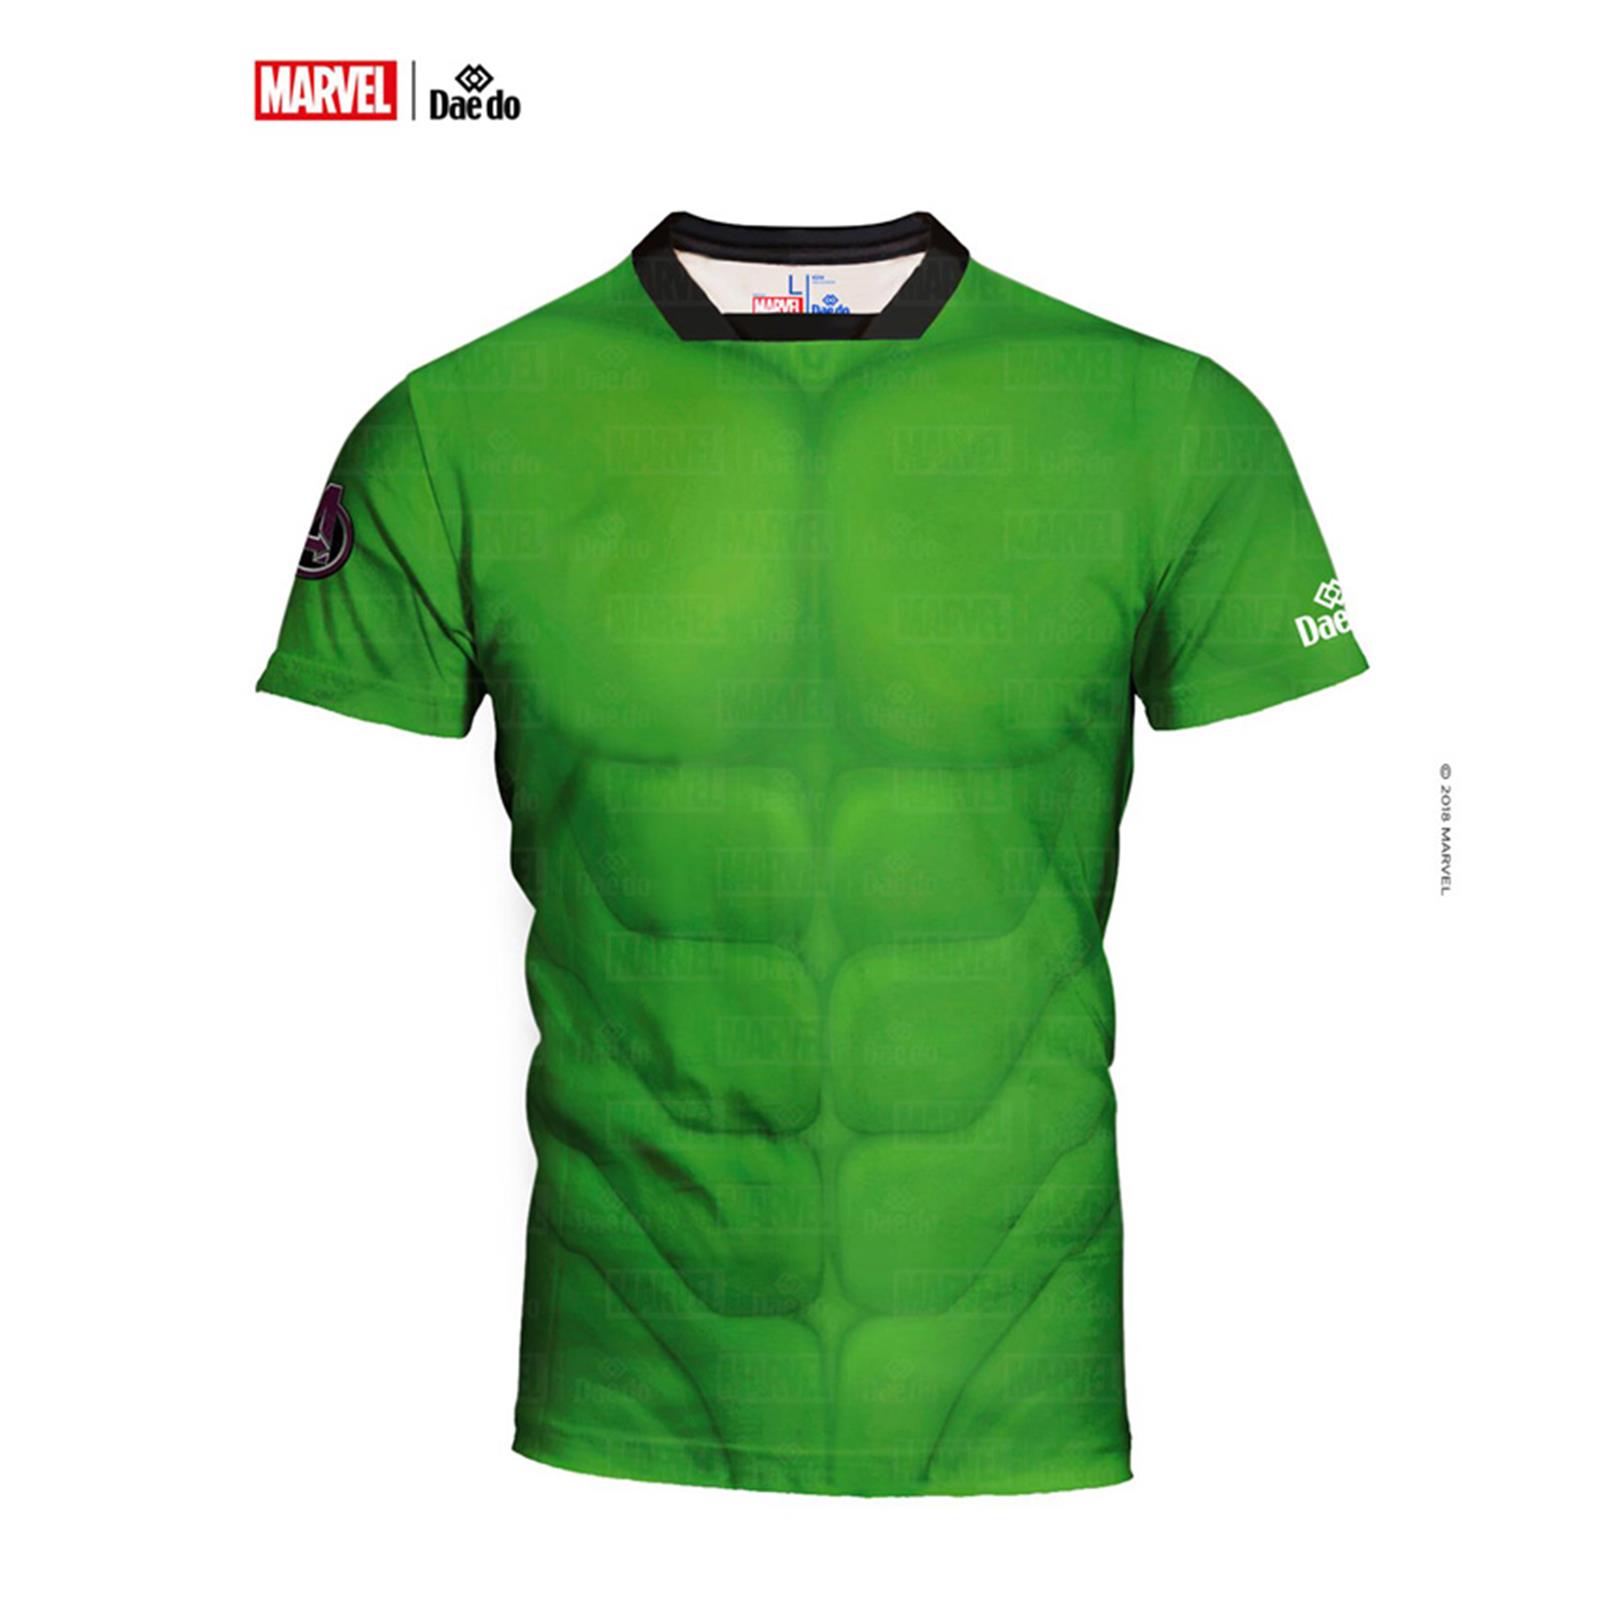 Dae Do Maglietta Hulk Full Print Slim Fit (M - VERDE)